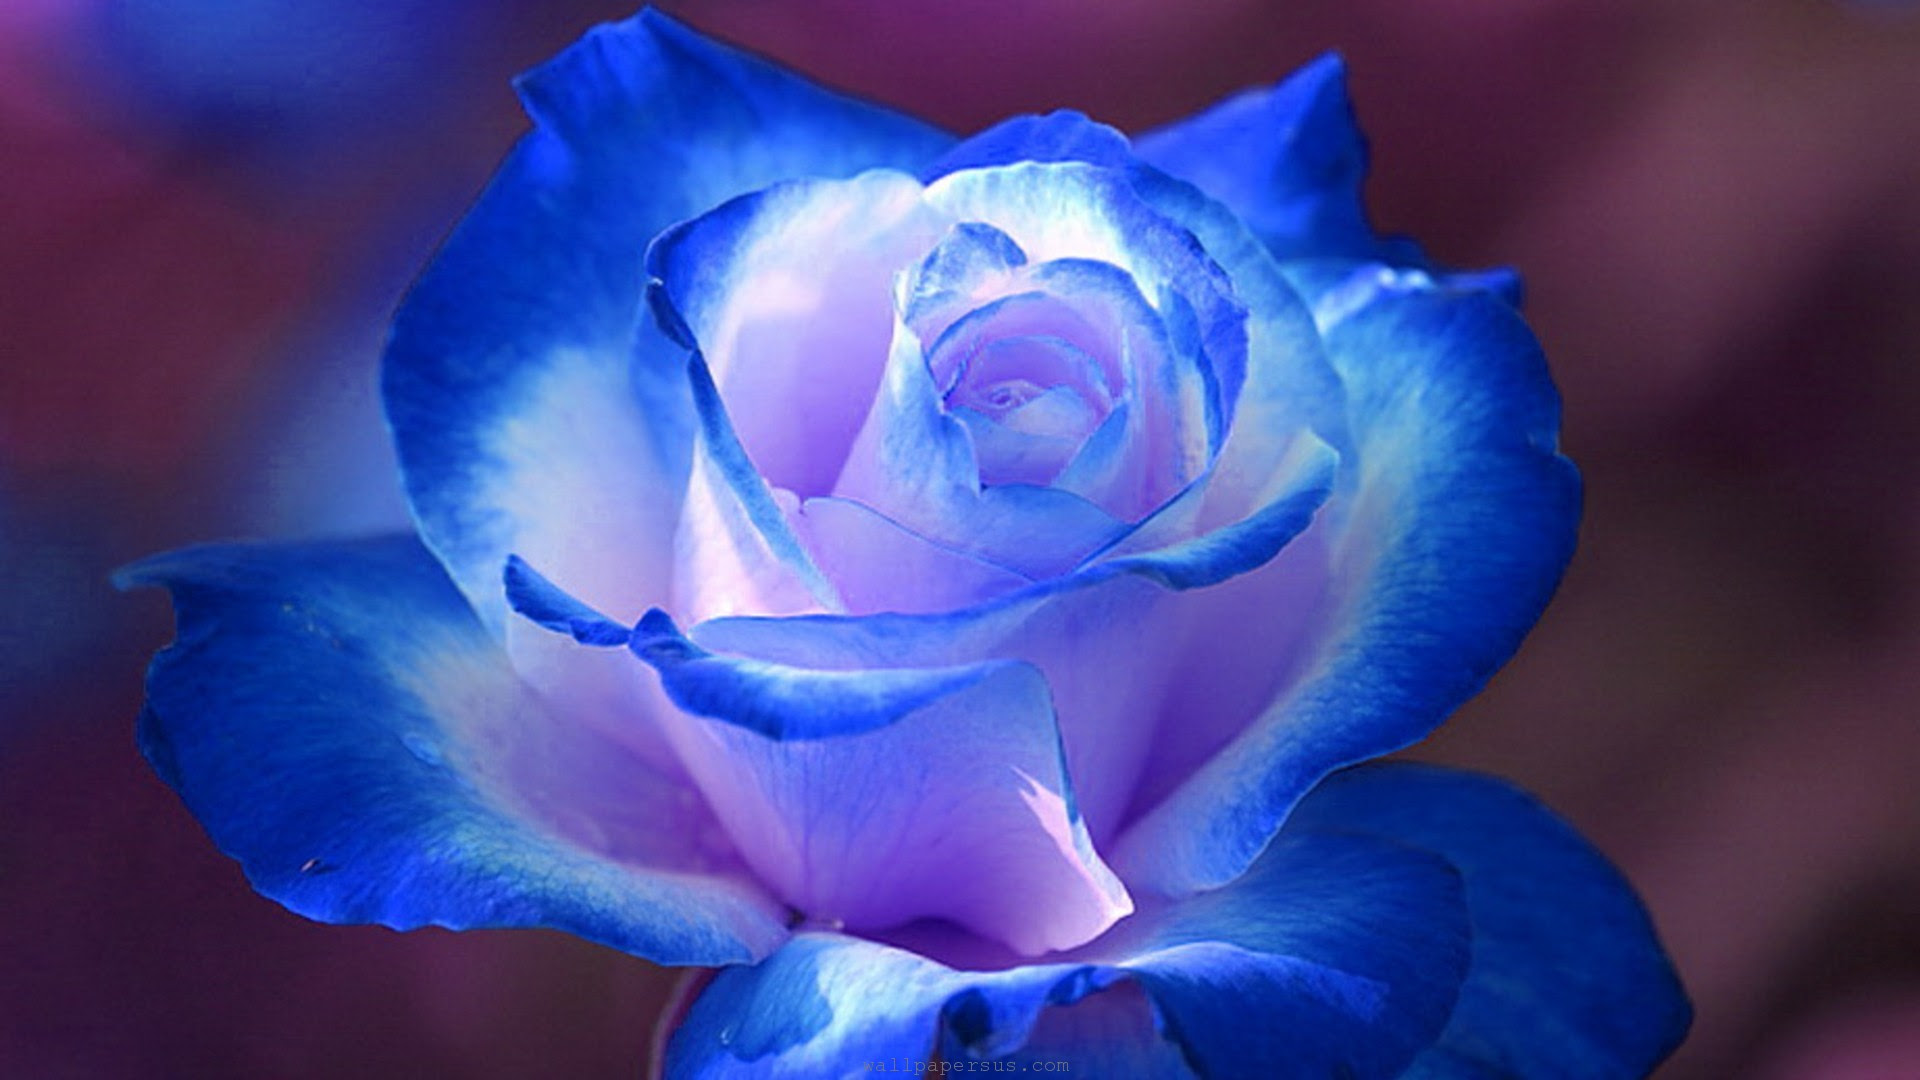 Blue Rose Wallpapers - Wallpaper, High Definition, High ...